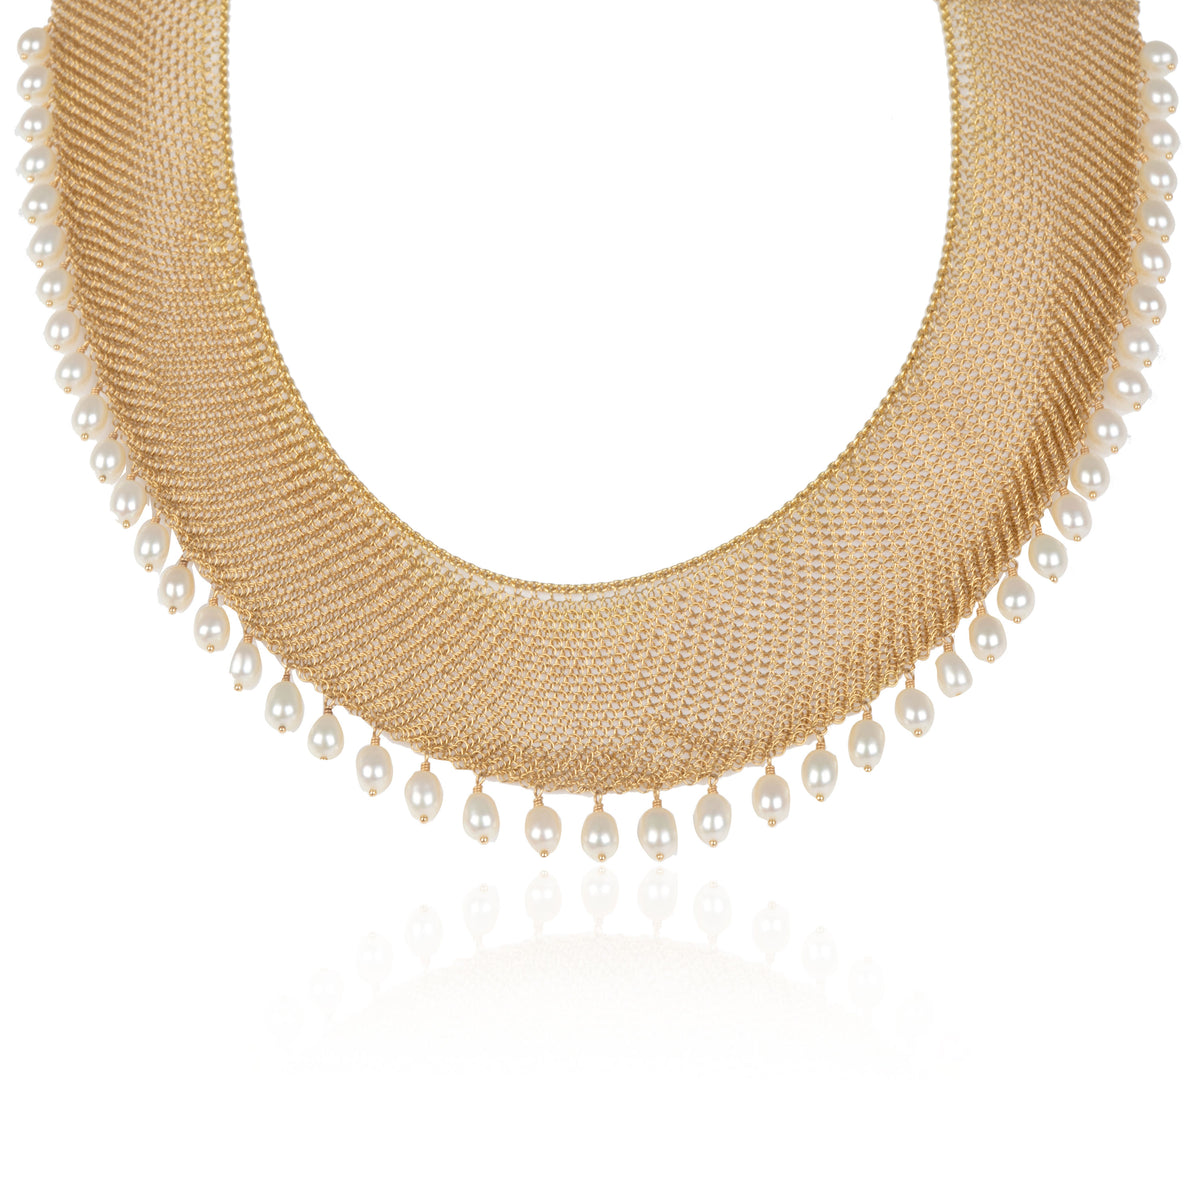 Tiffany & Co. Elsa Peretti Pearl Necklace in 18K Yellow Gold